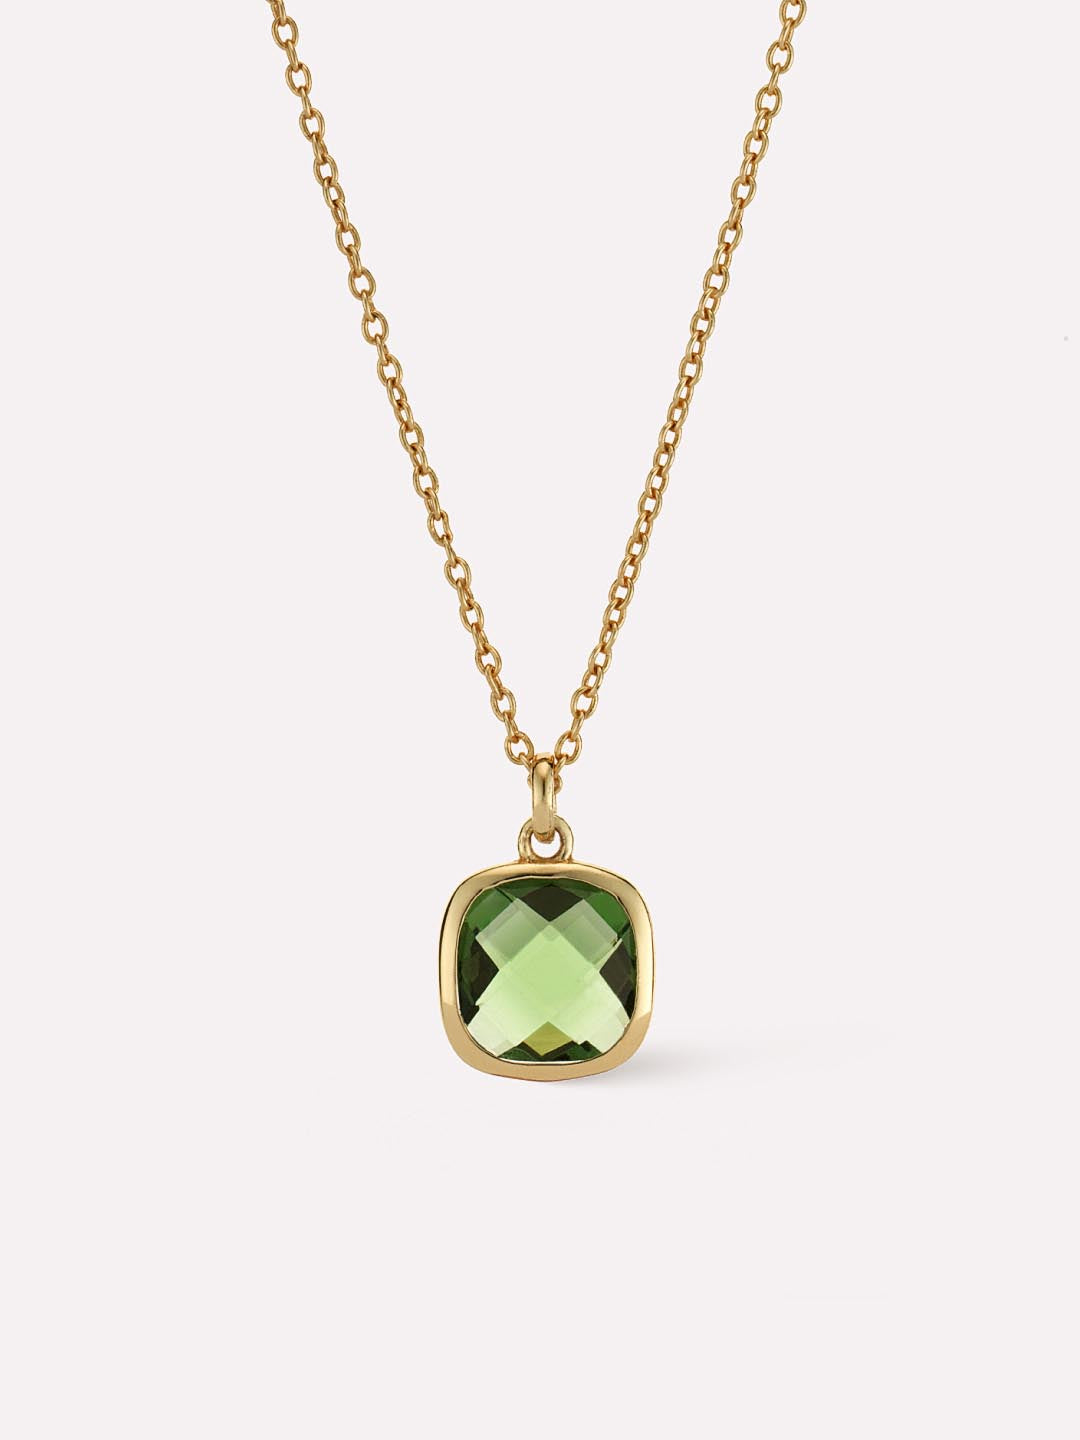 Emerald Stone Pendant Necklace | Stone pendant necklace, Emerald necklace  pendant, Gold necklace designs